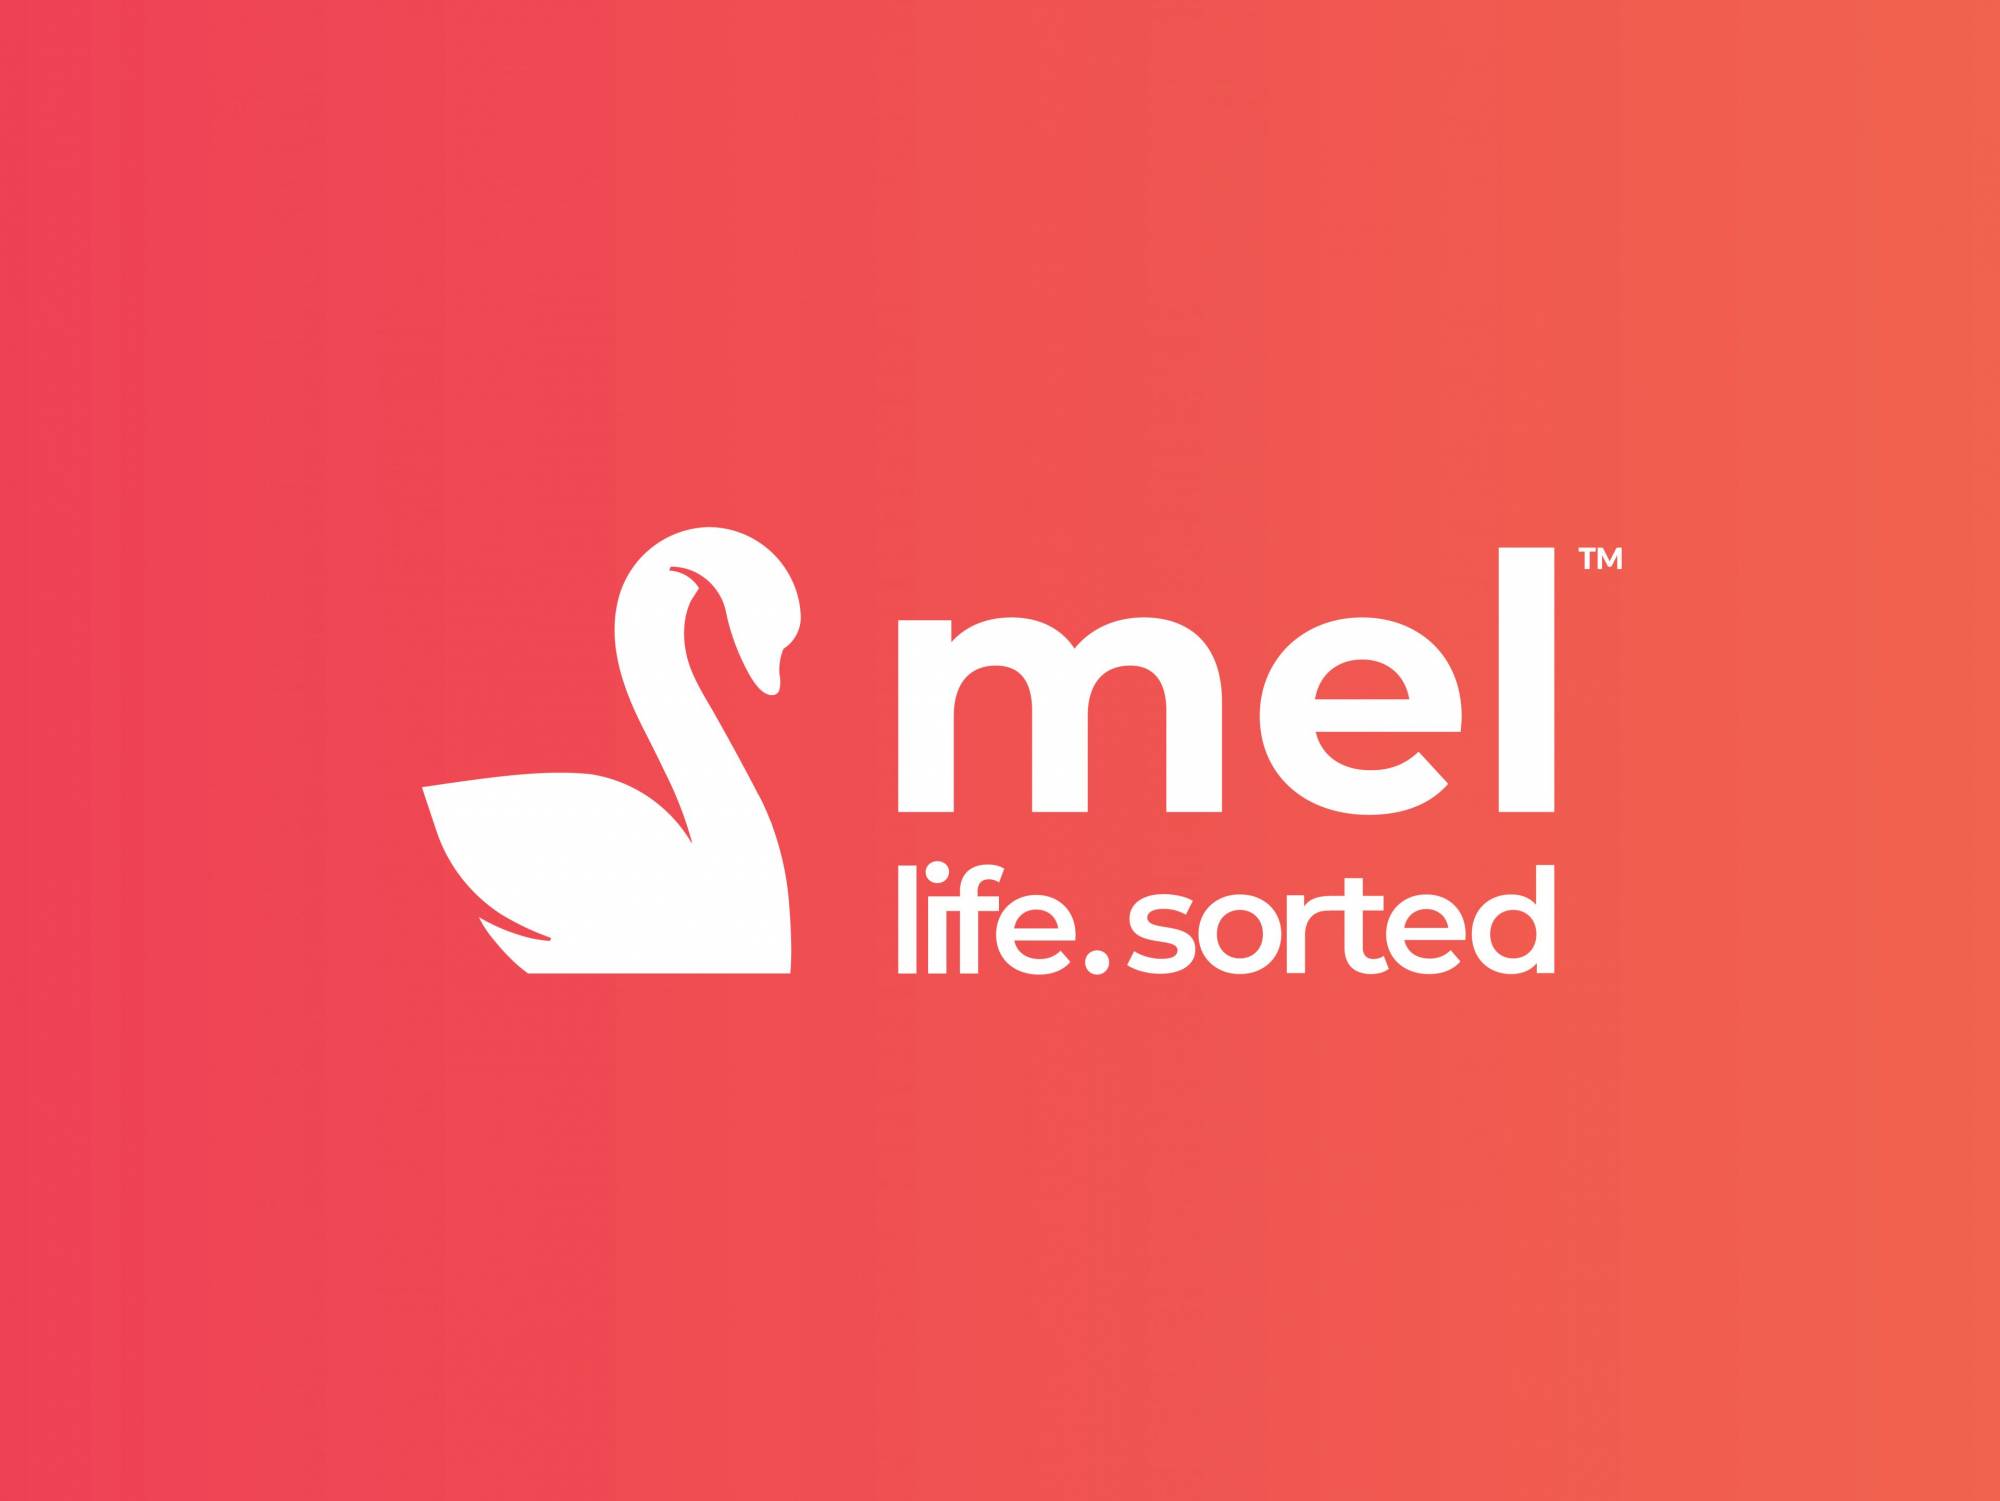 mel brand identity designed by brand agency DAIS pro bono project